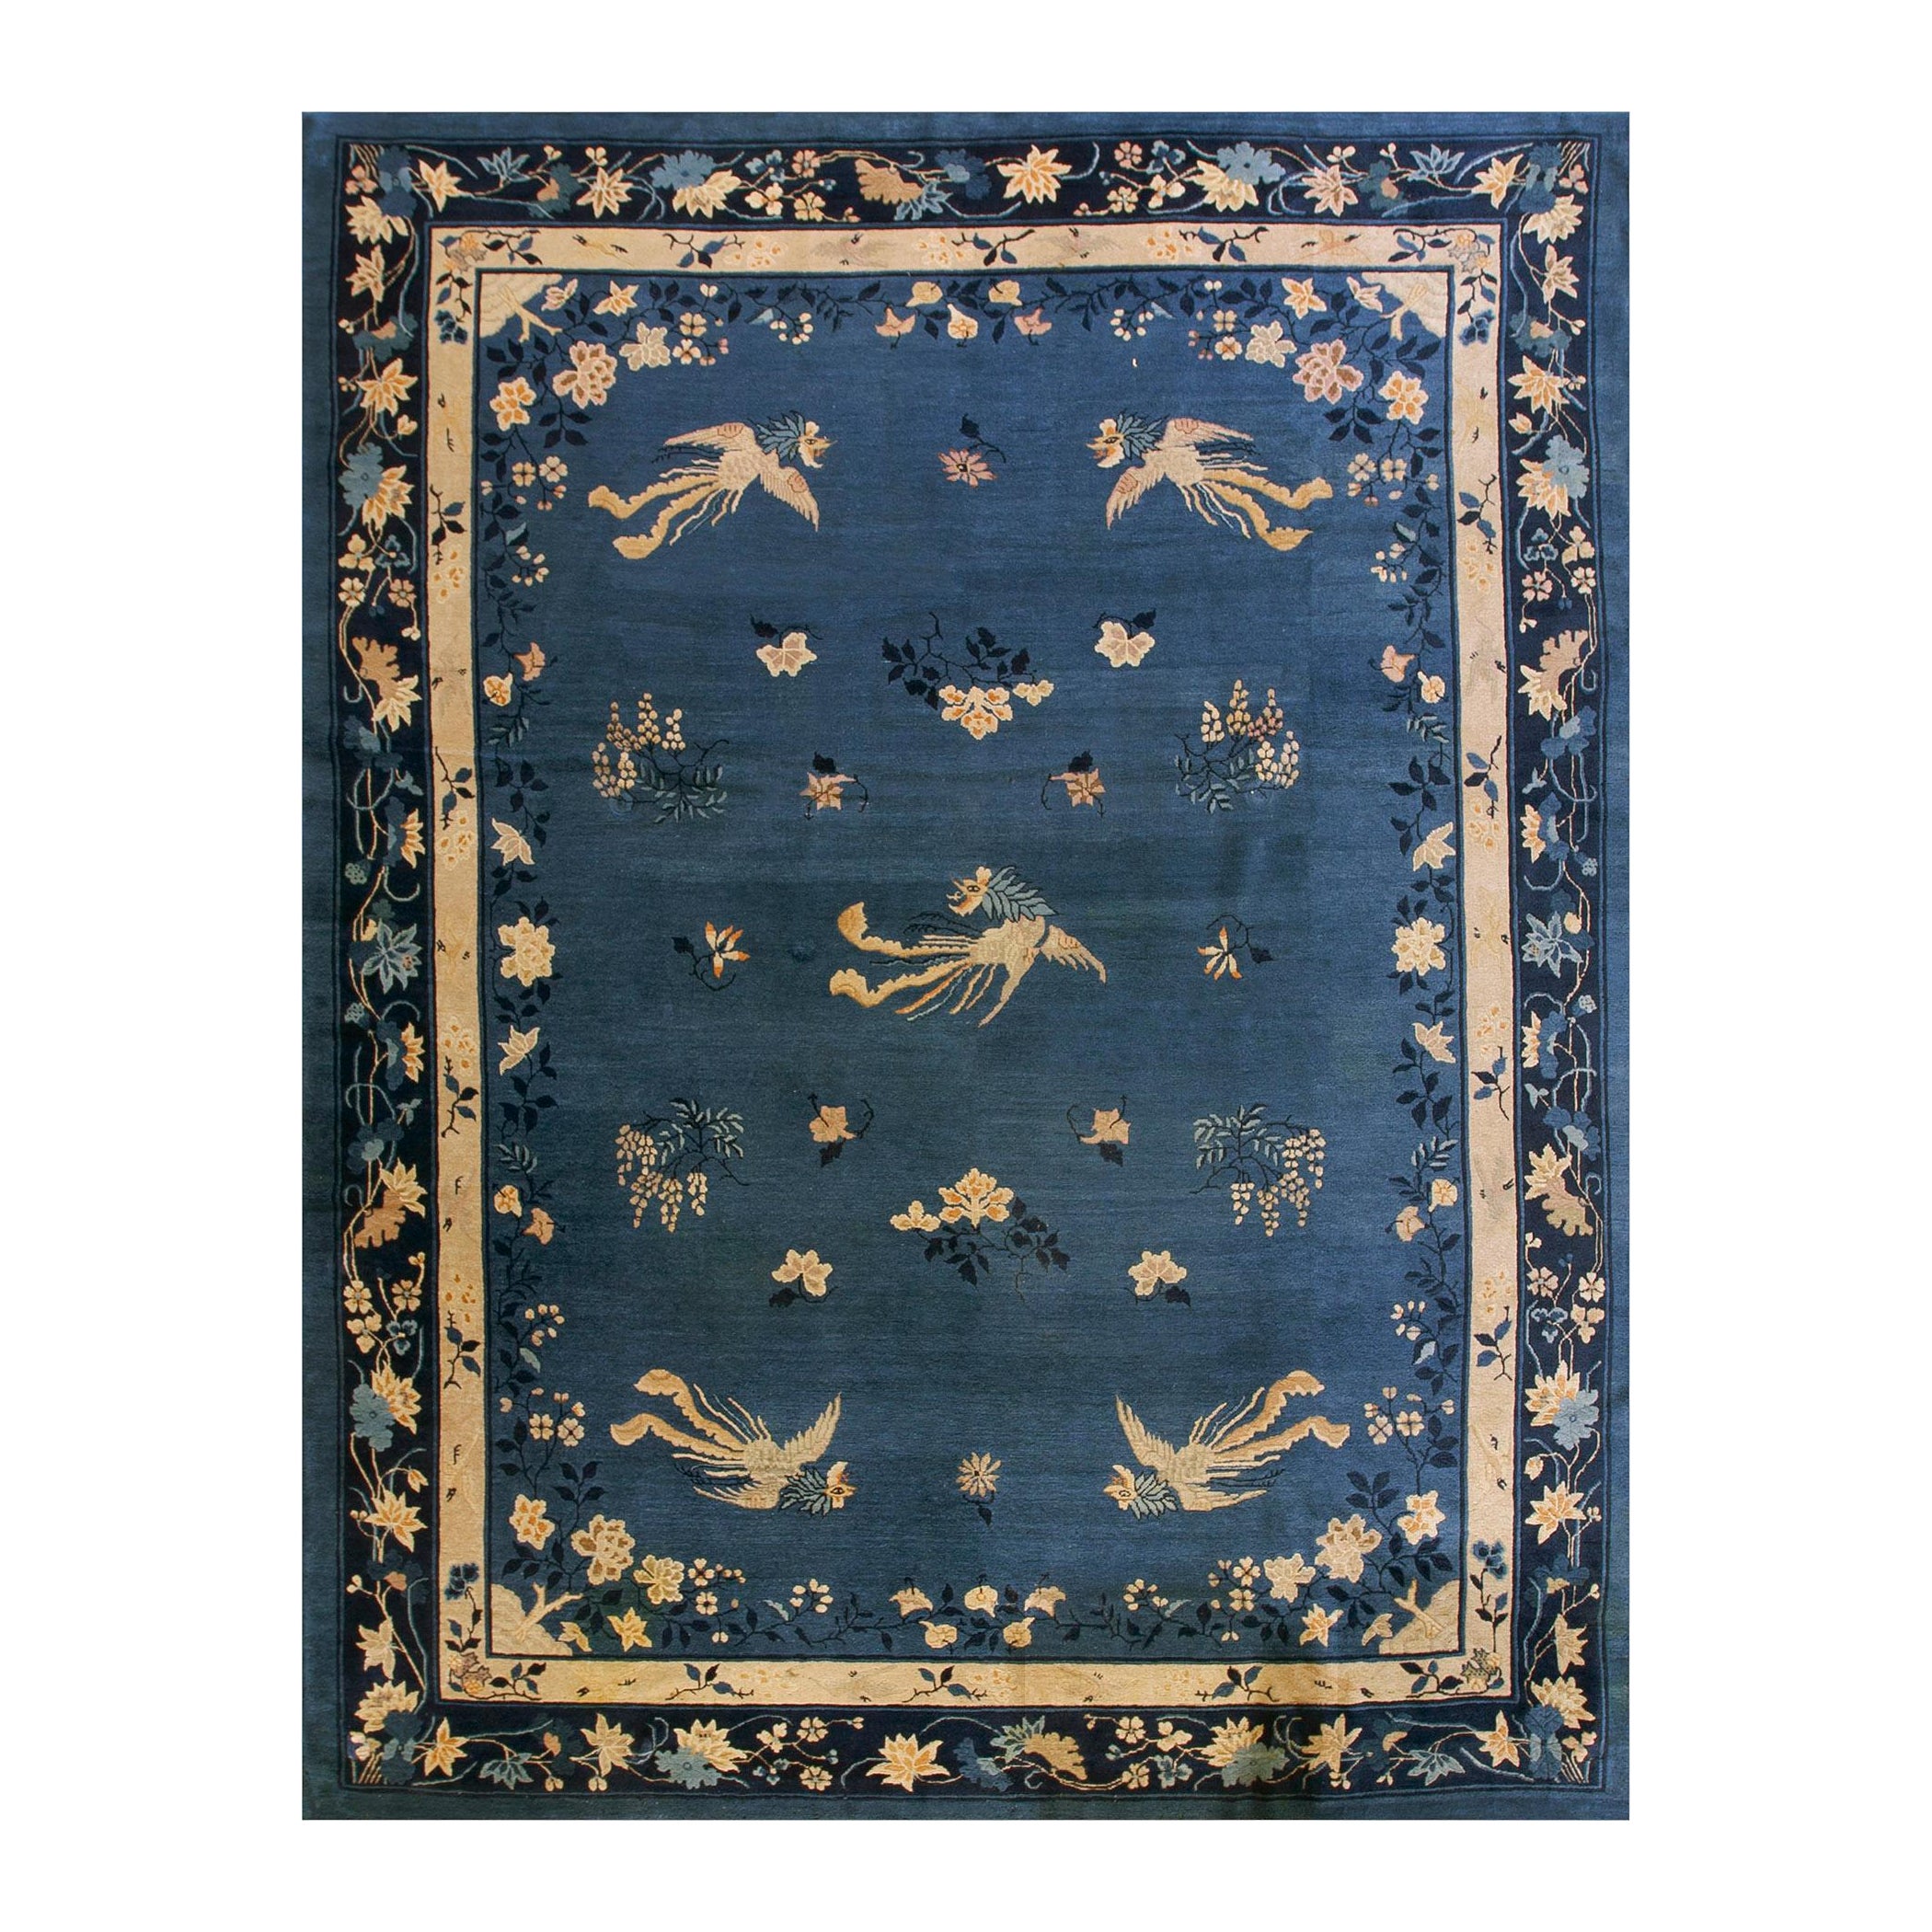 Early 20th Century Chinese Peking Carpet ( 9'2" x 11'6" - 280 x 355 )